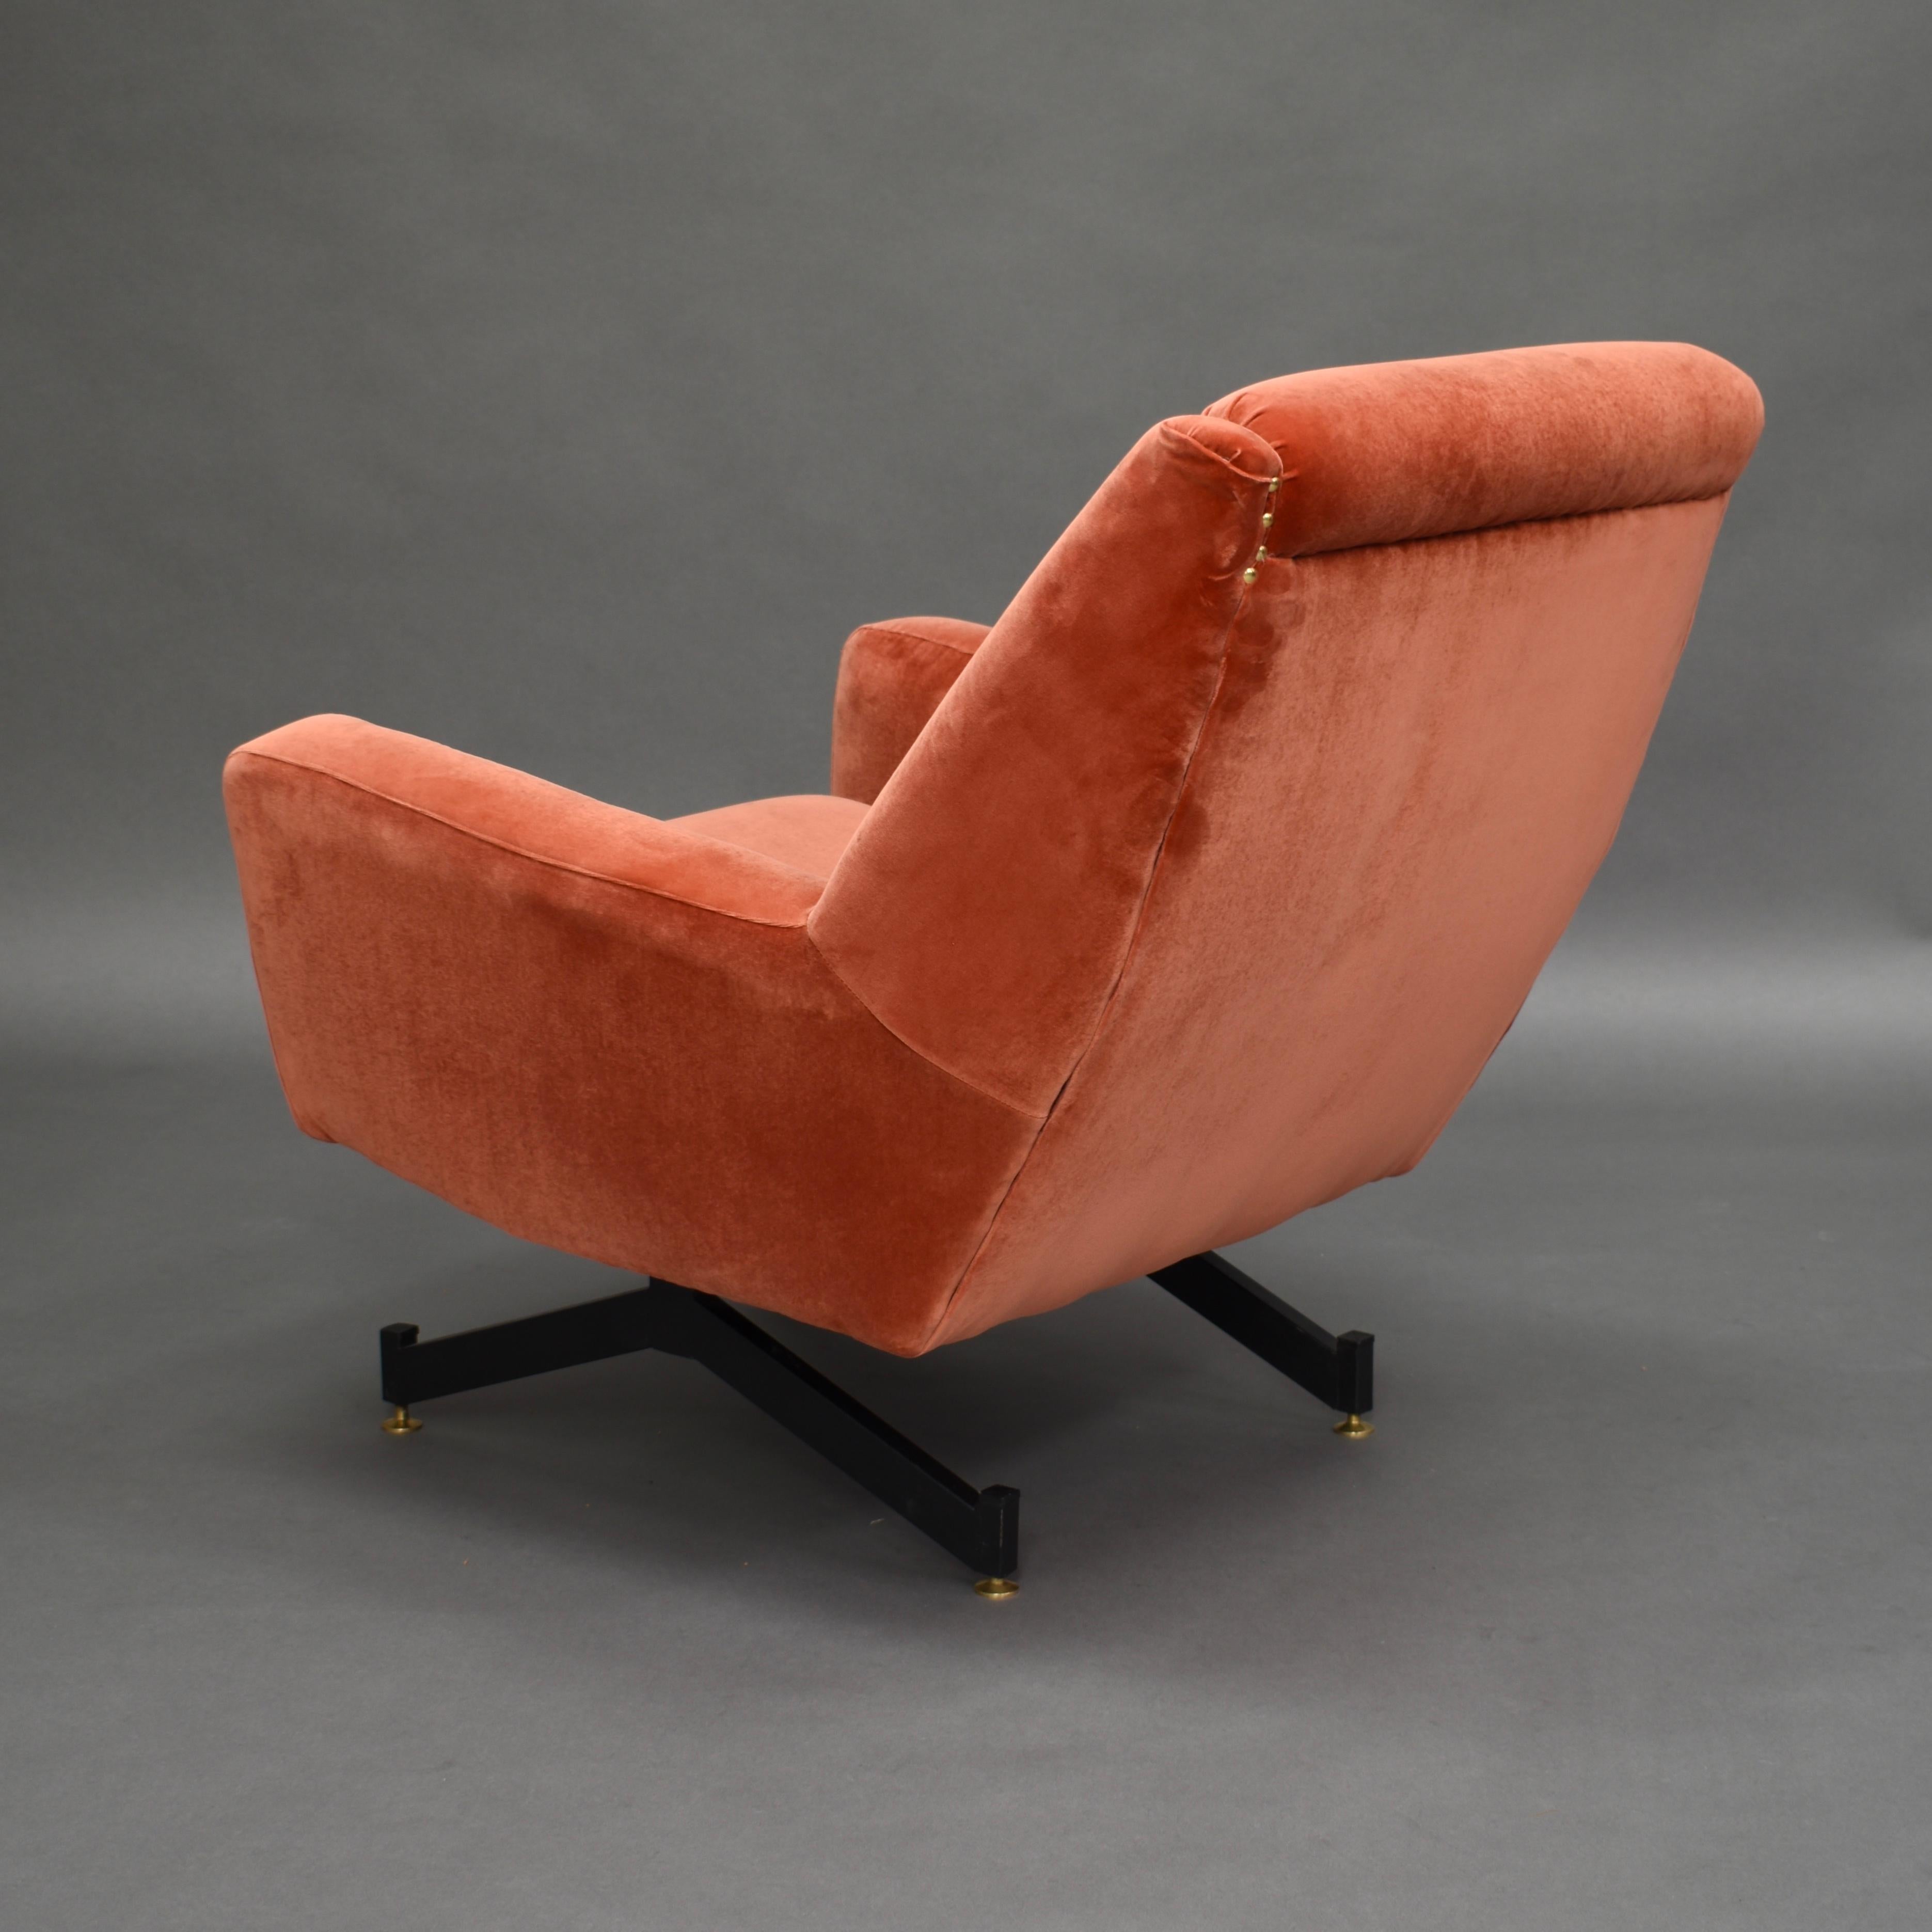 Metal Italian Midcentury Lounge Chair in New Copper Pink Velvet, Italy, 1950s